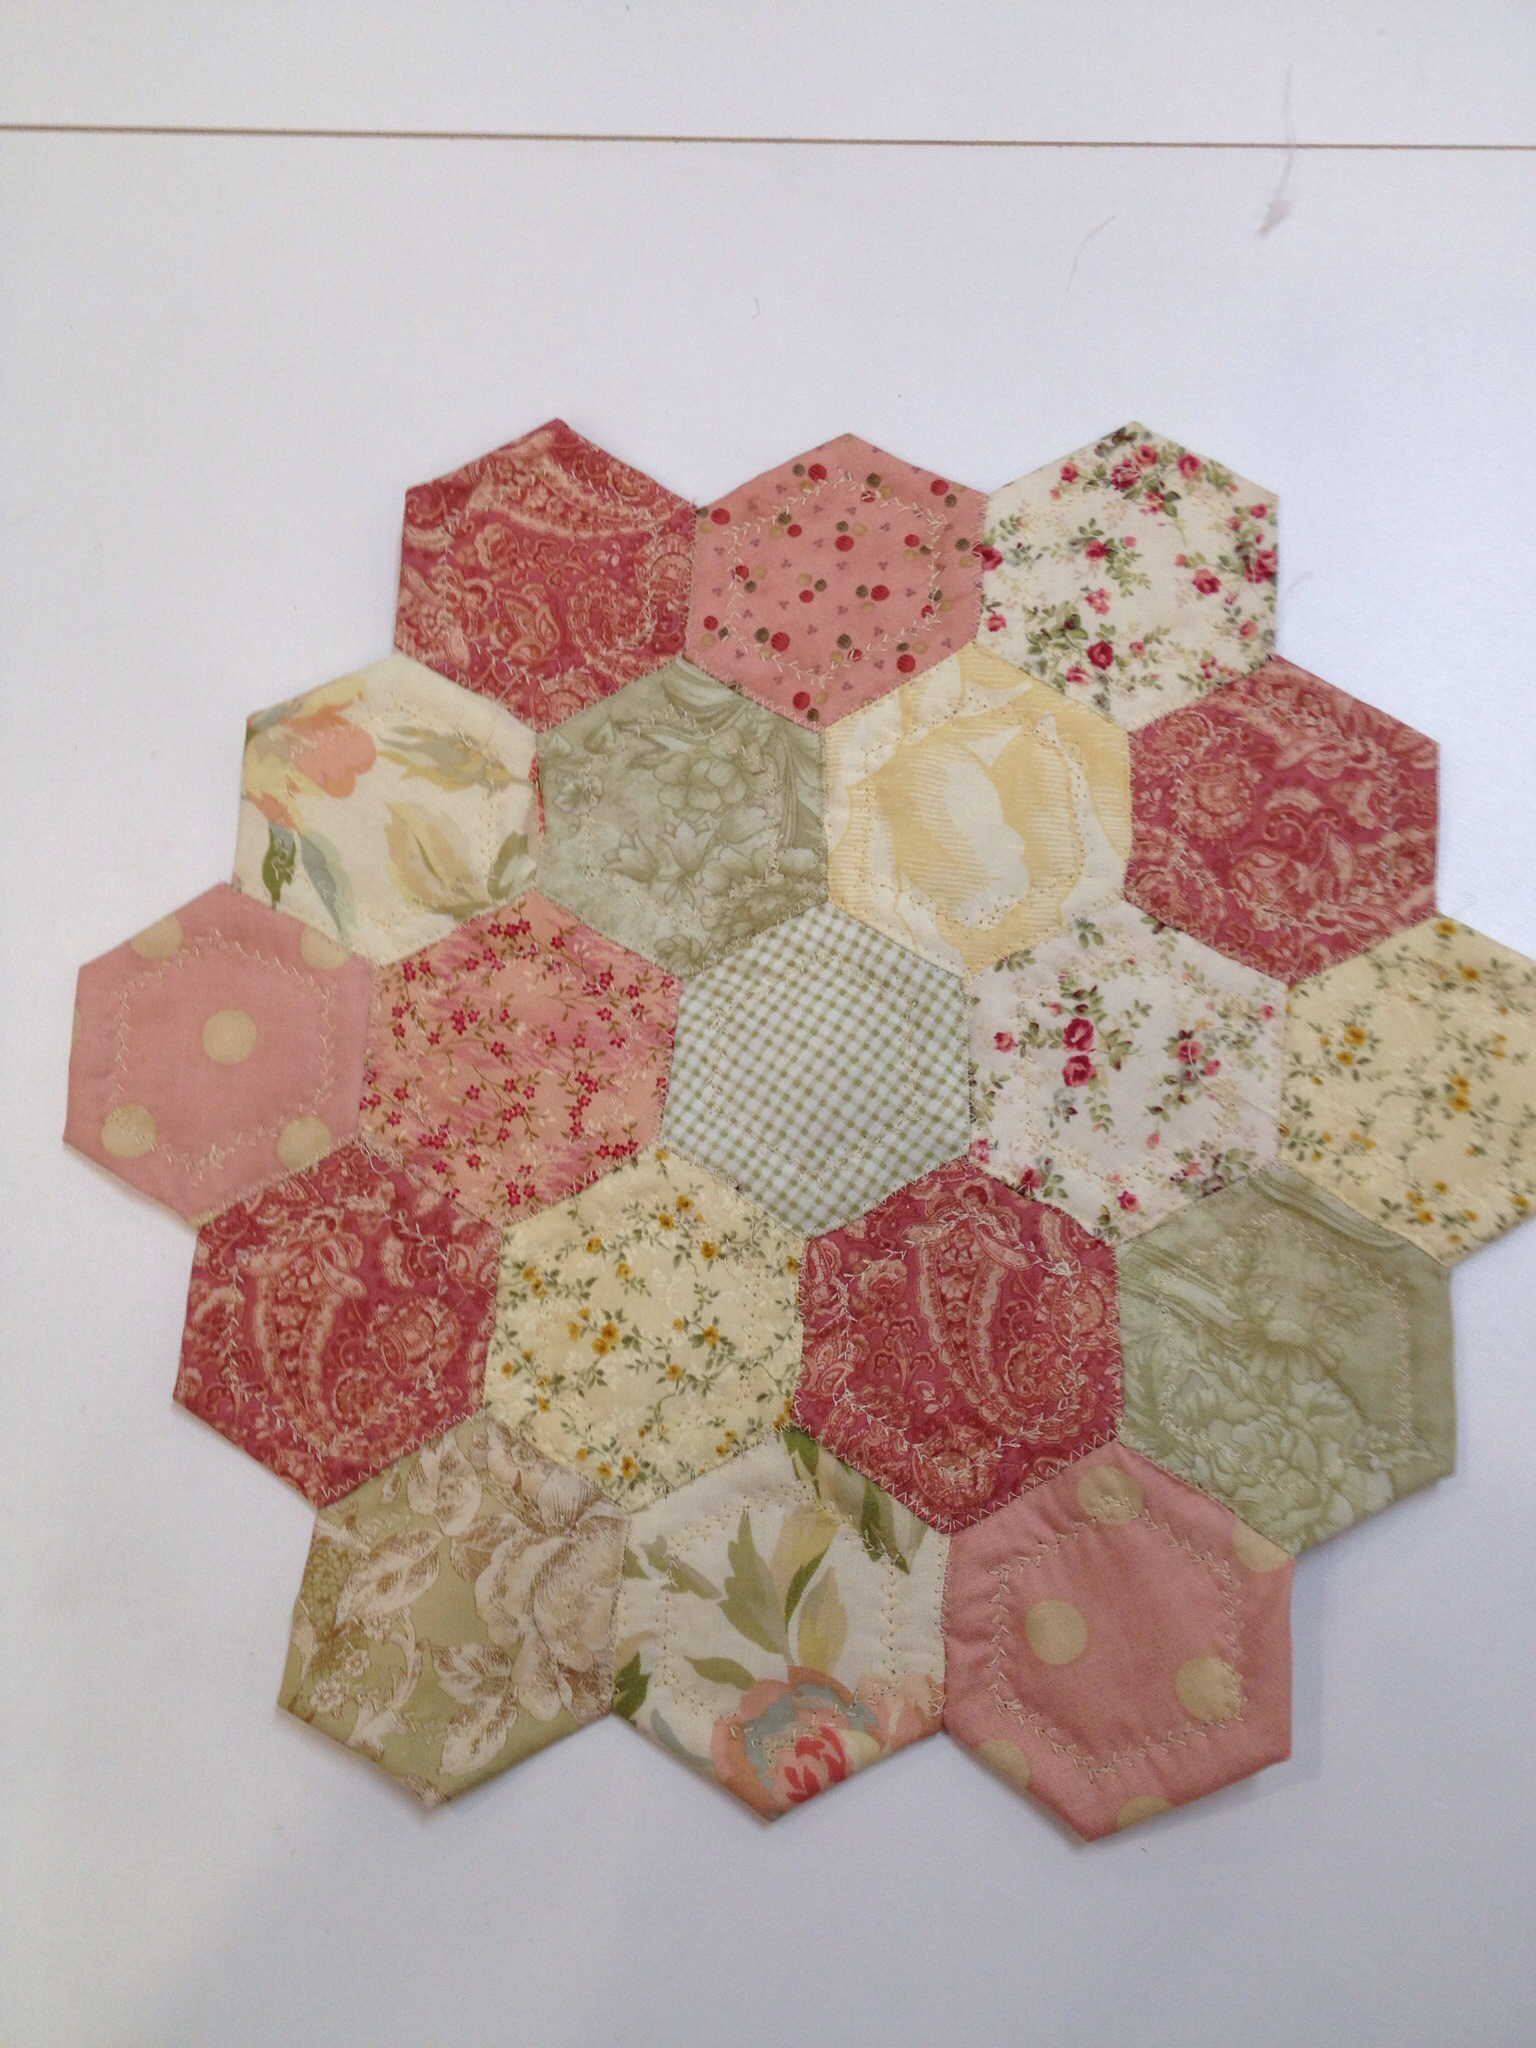 Quilt as you go hexagons tutorial #hexyalong – Raspberry Spool